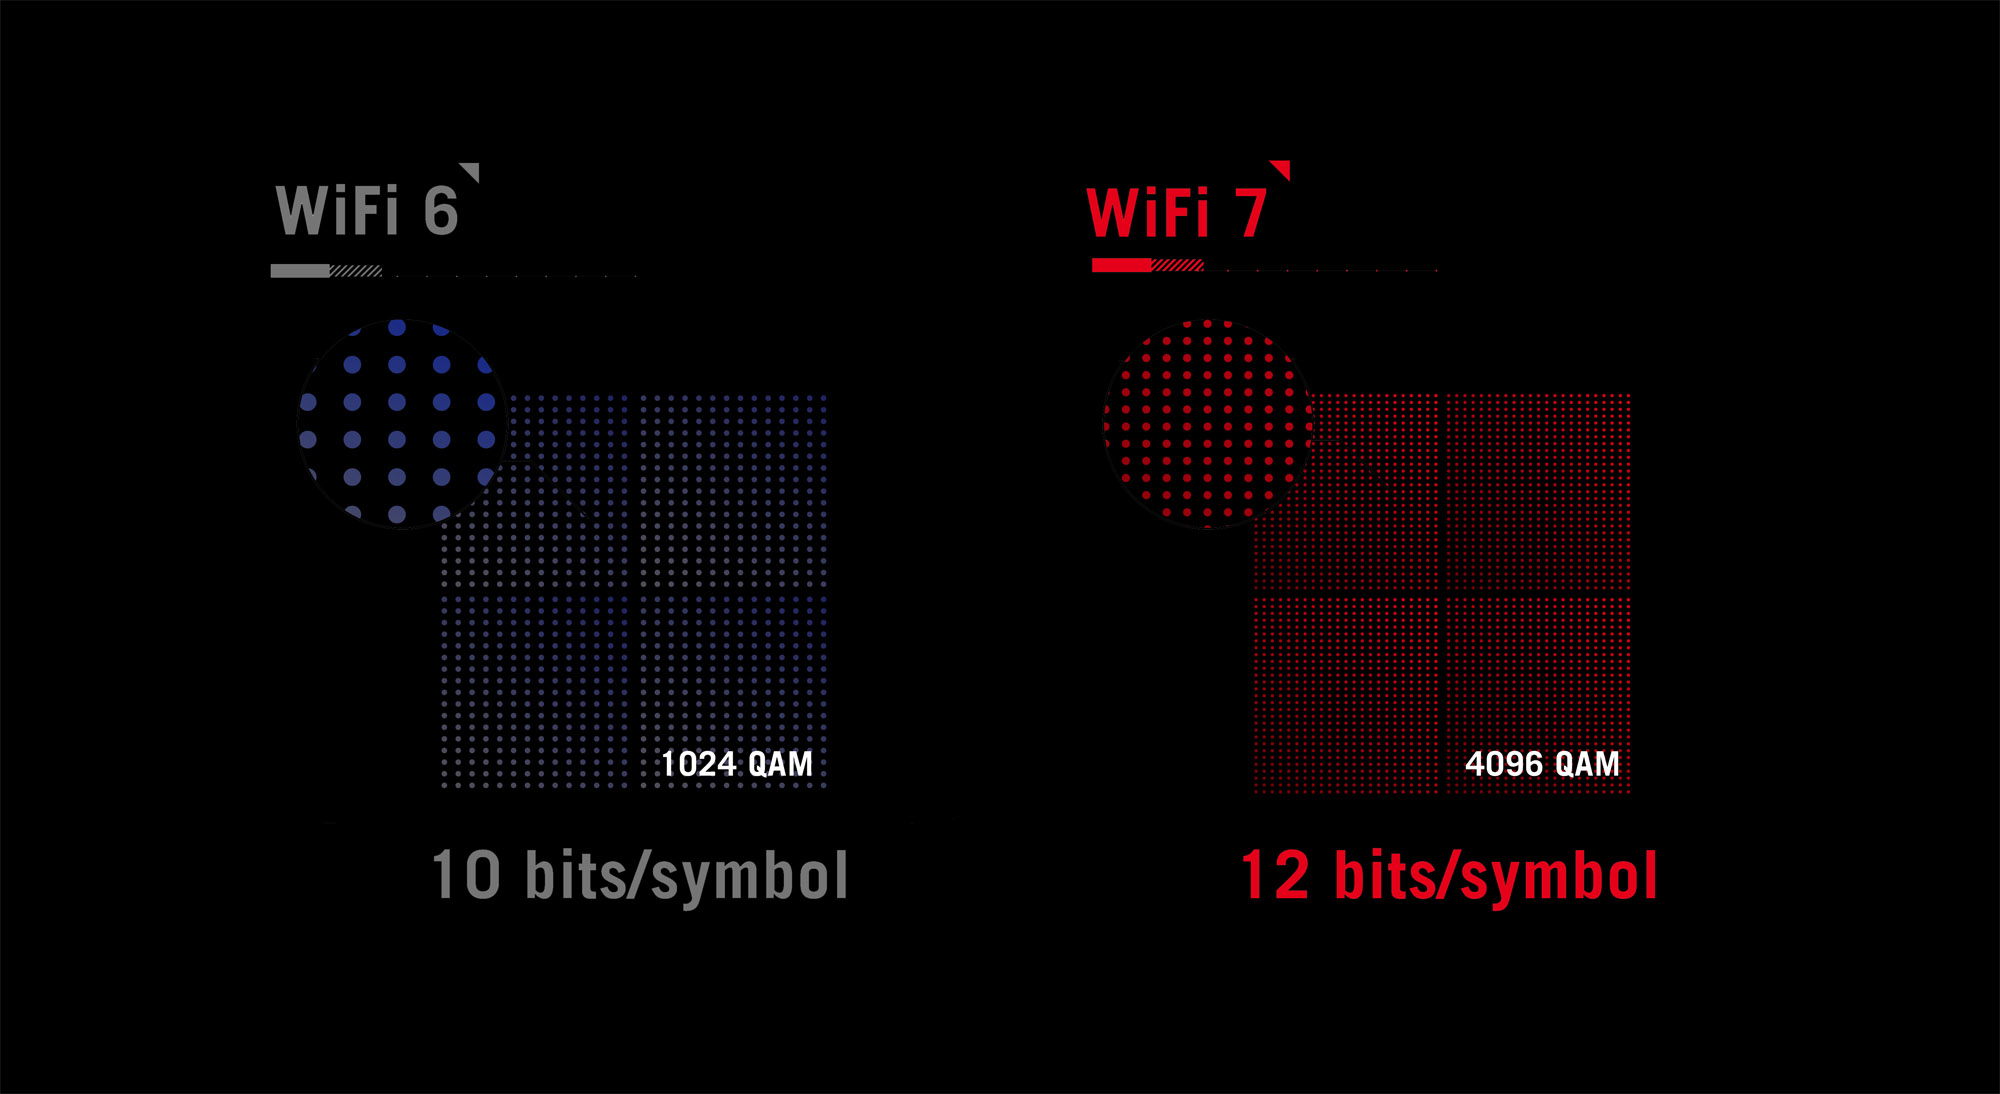 A graph showing how WiFi 7 can achieve higher bandwidth through 12 bits/symbol 4096 QAM